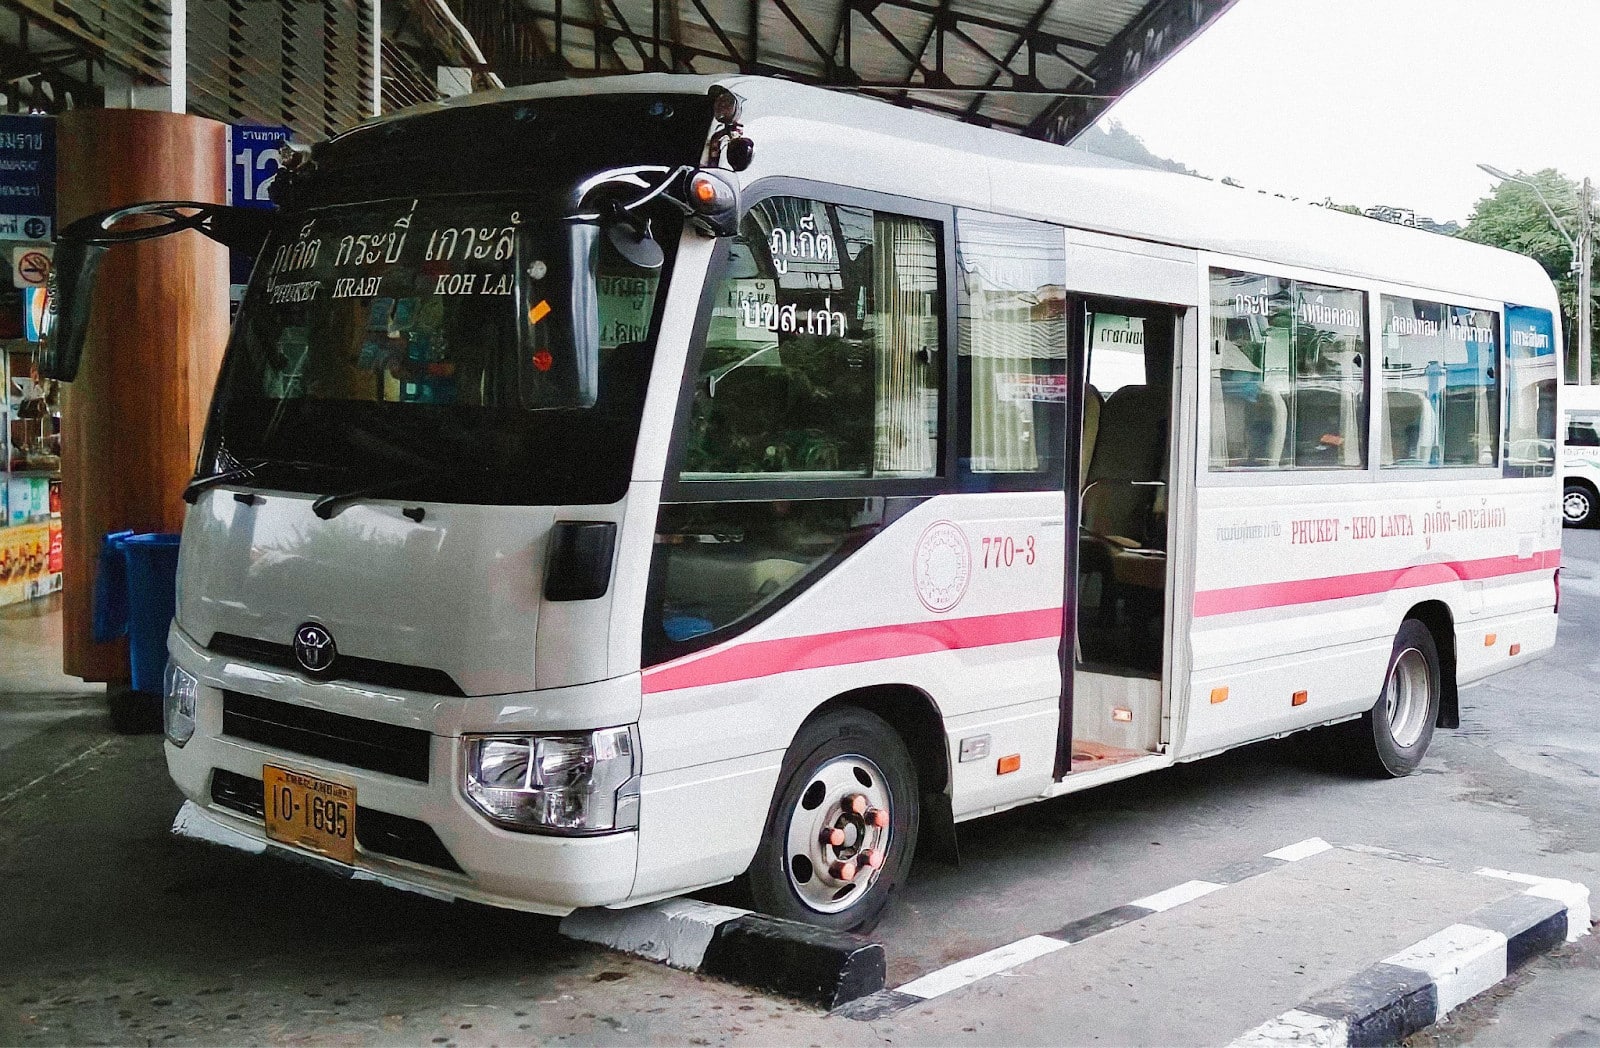 A bus ready to take passengers from Bangkok to Koh Lanta